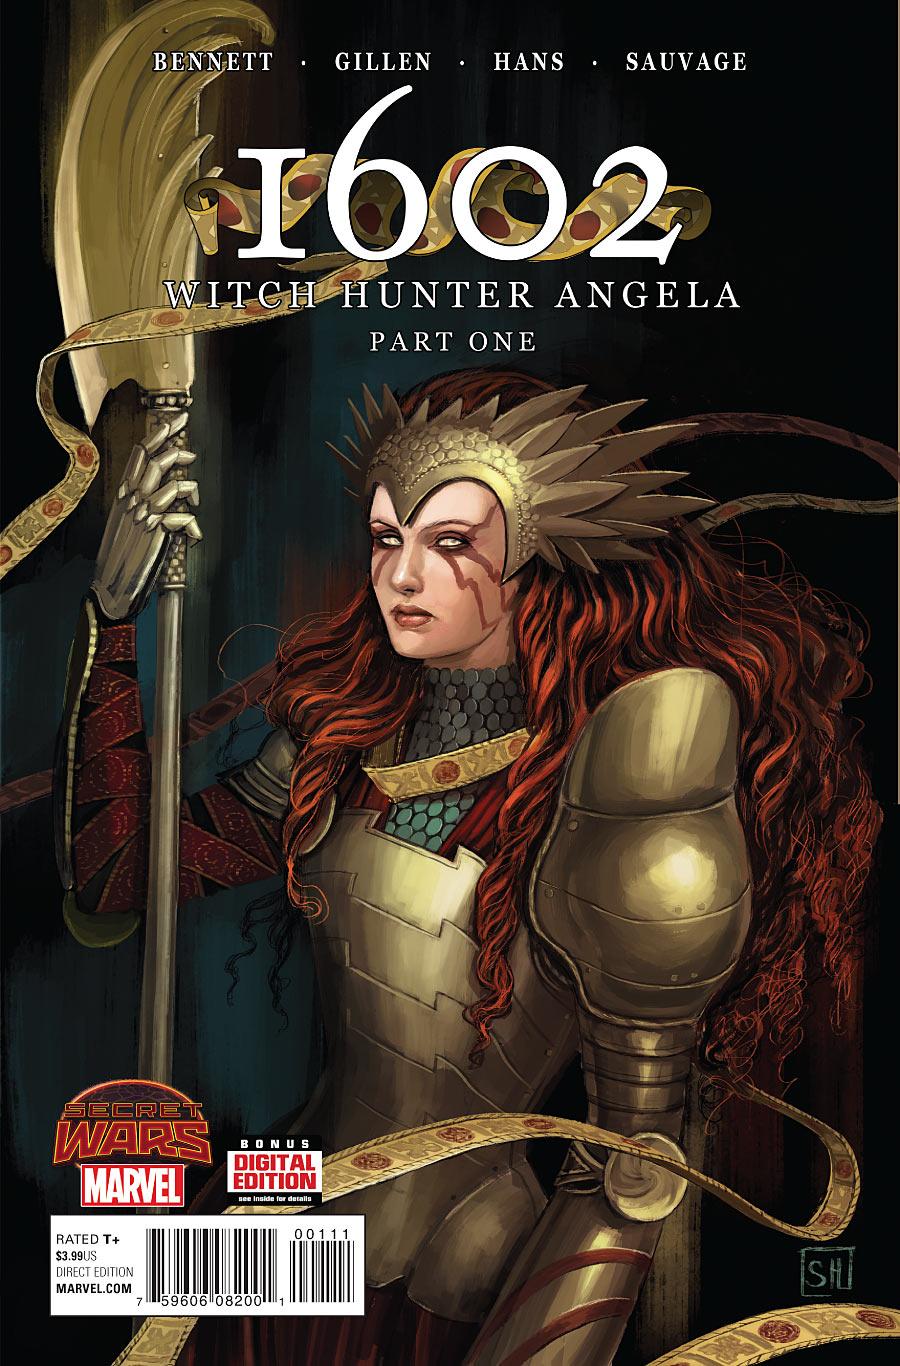 1602: Witch Hunter Angela Vol. 1 #1